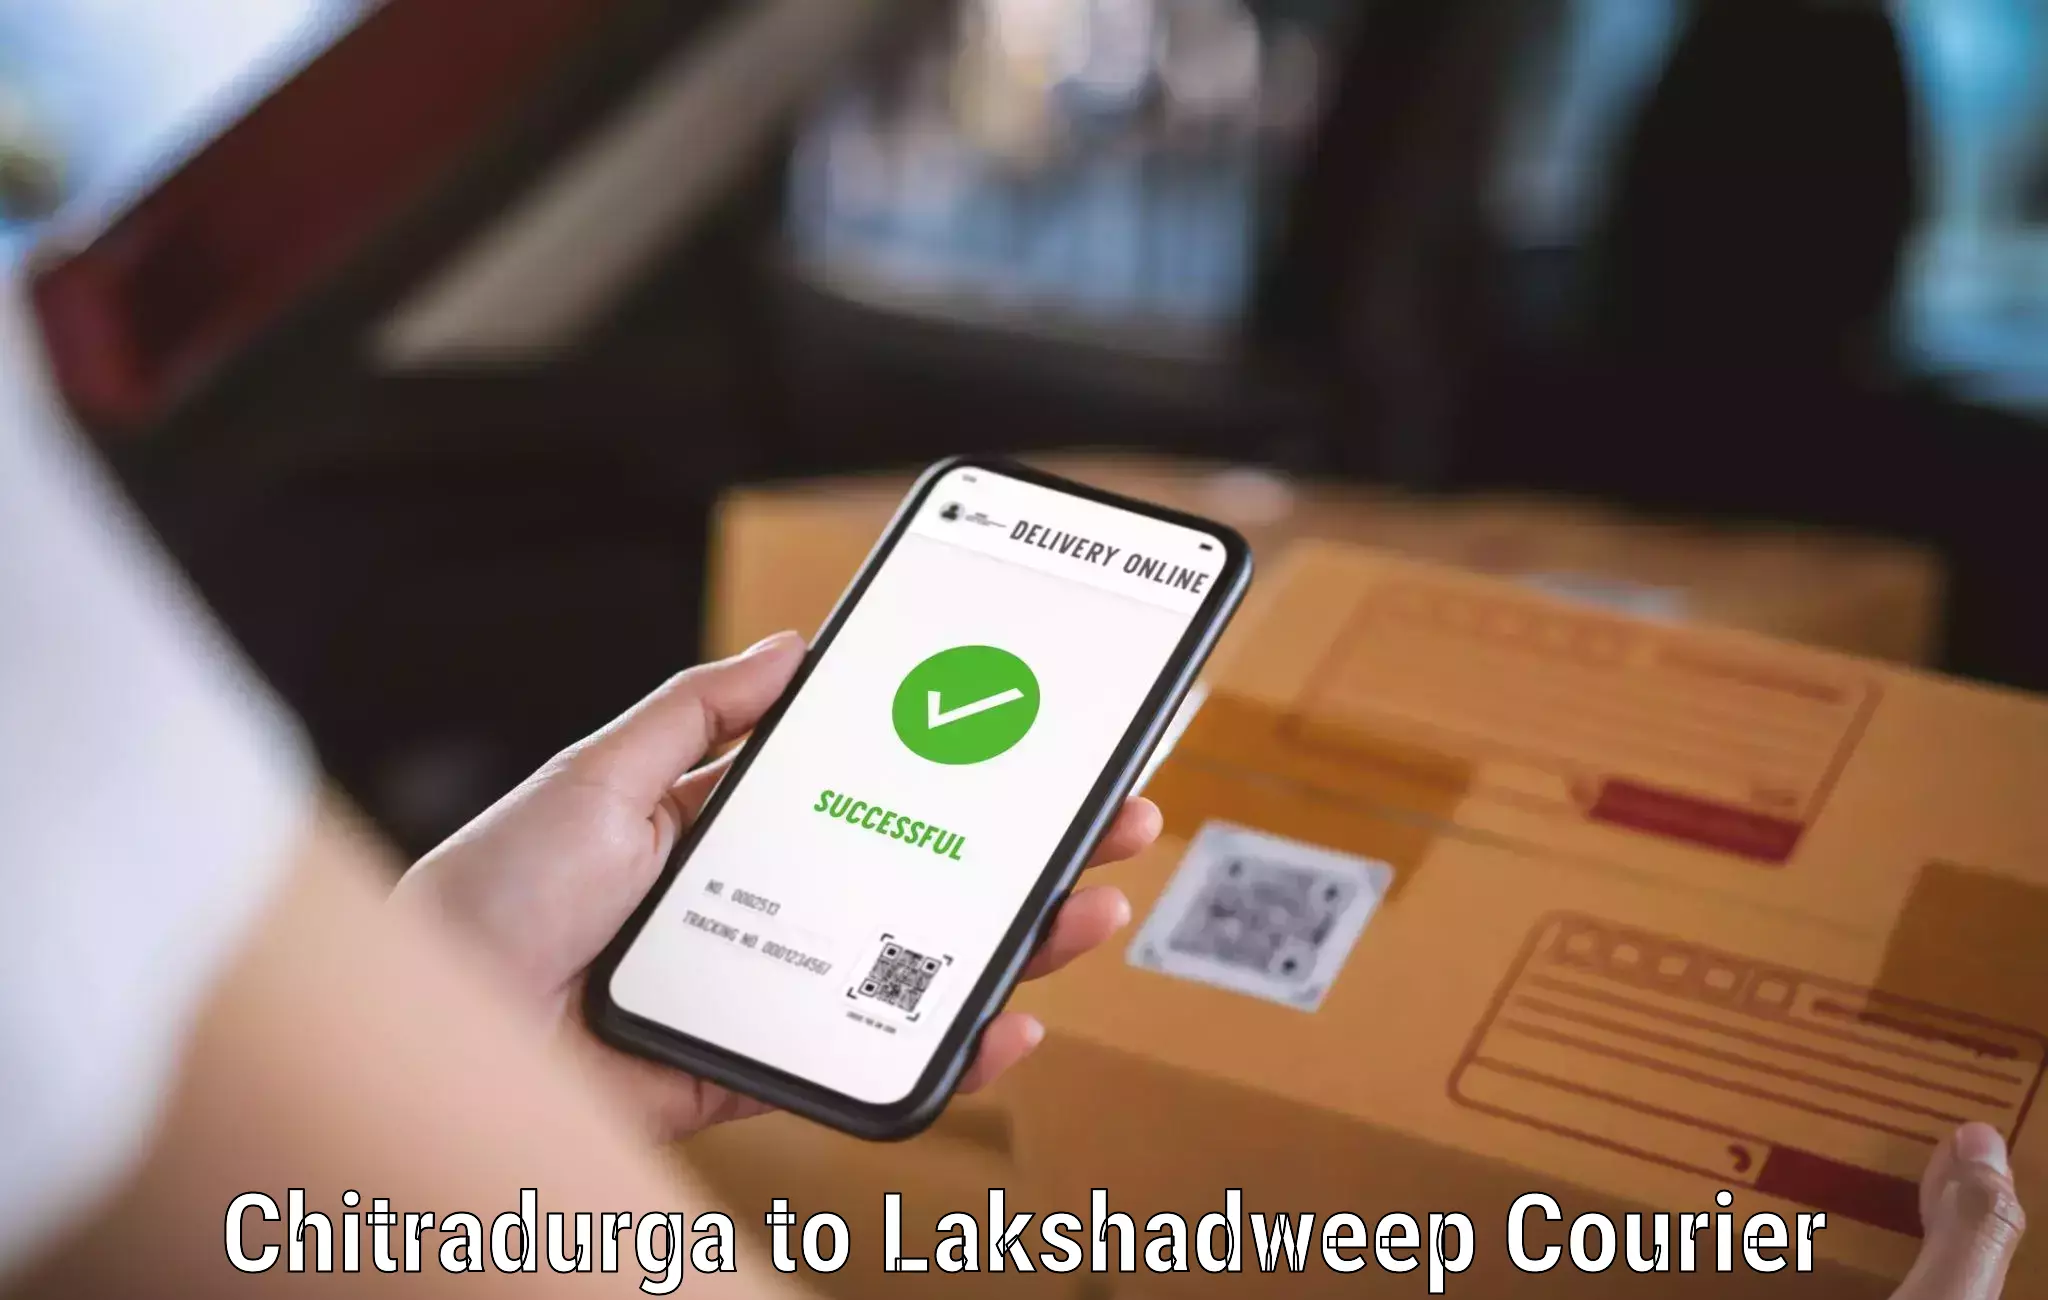 Business delivery service Chitradurga to Lakshadweep